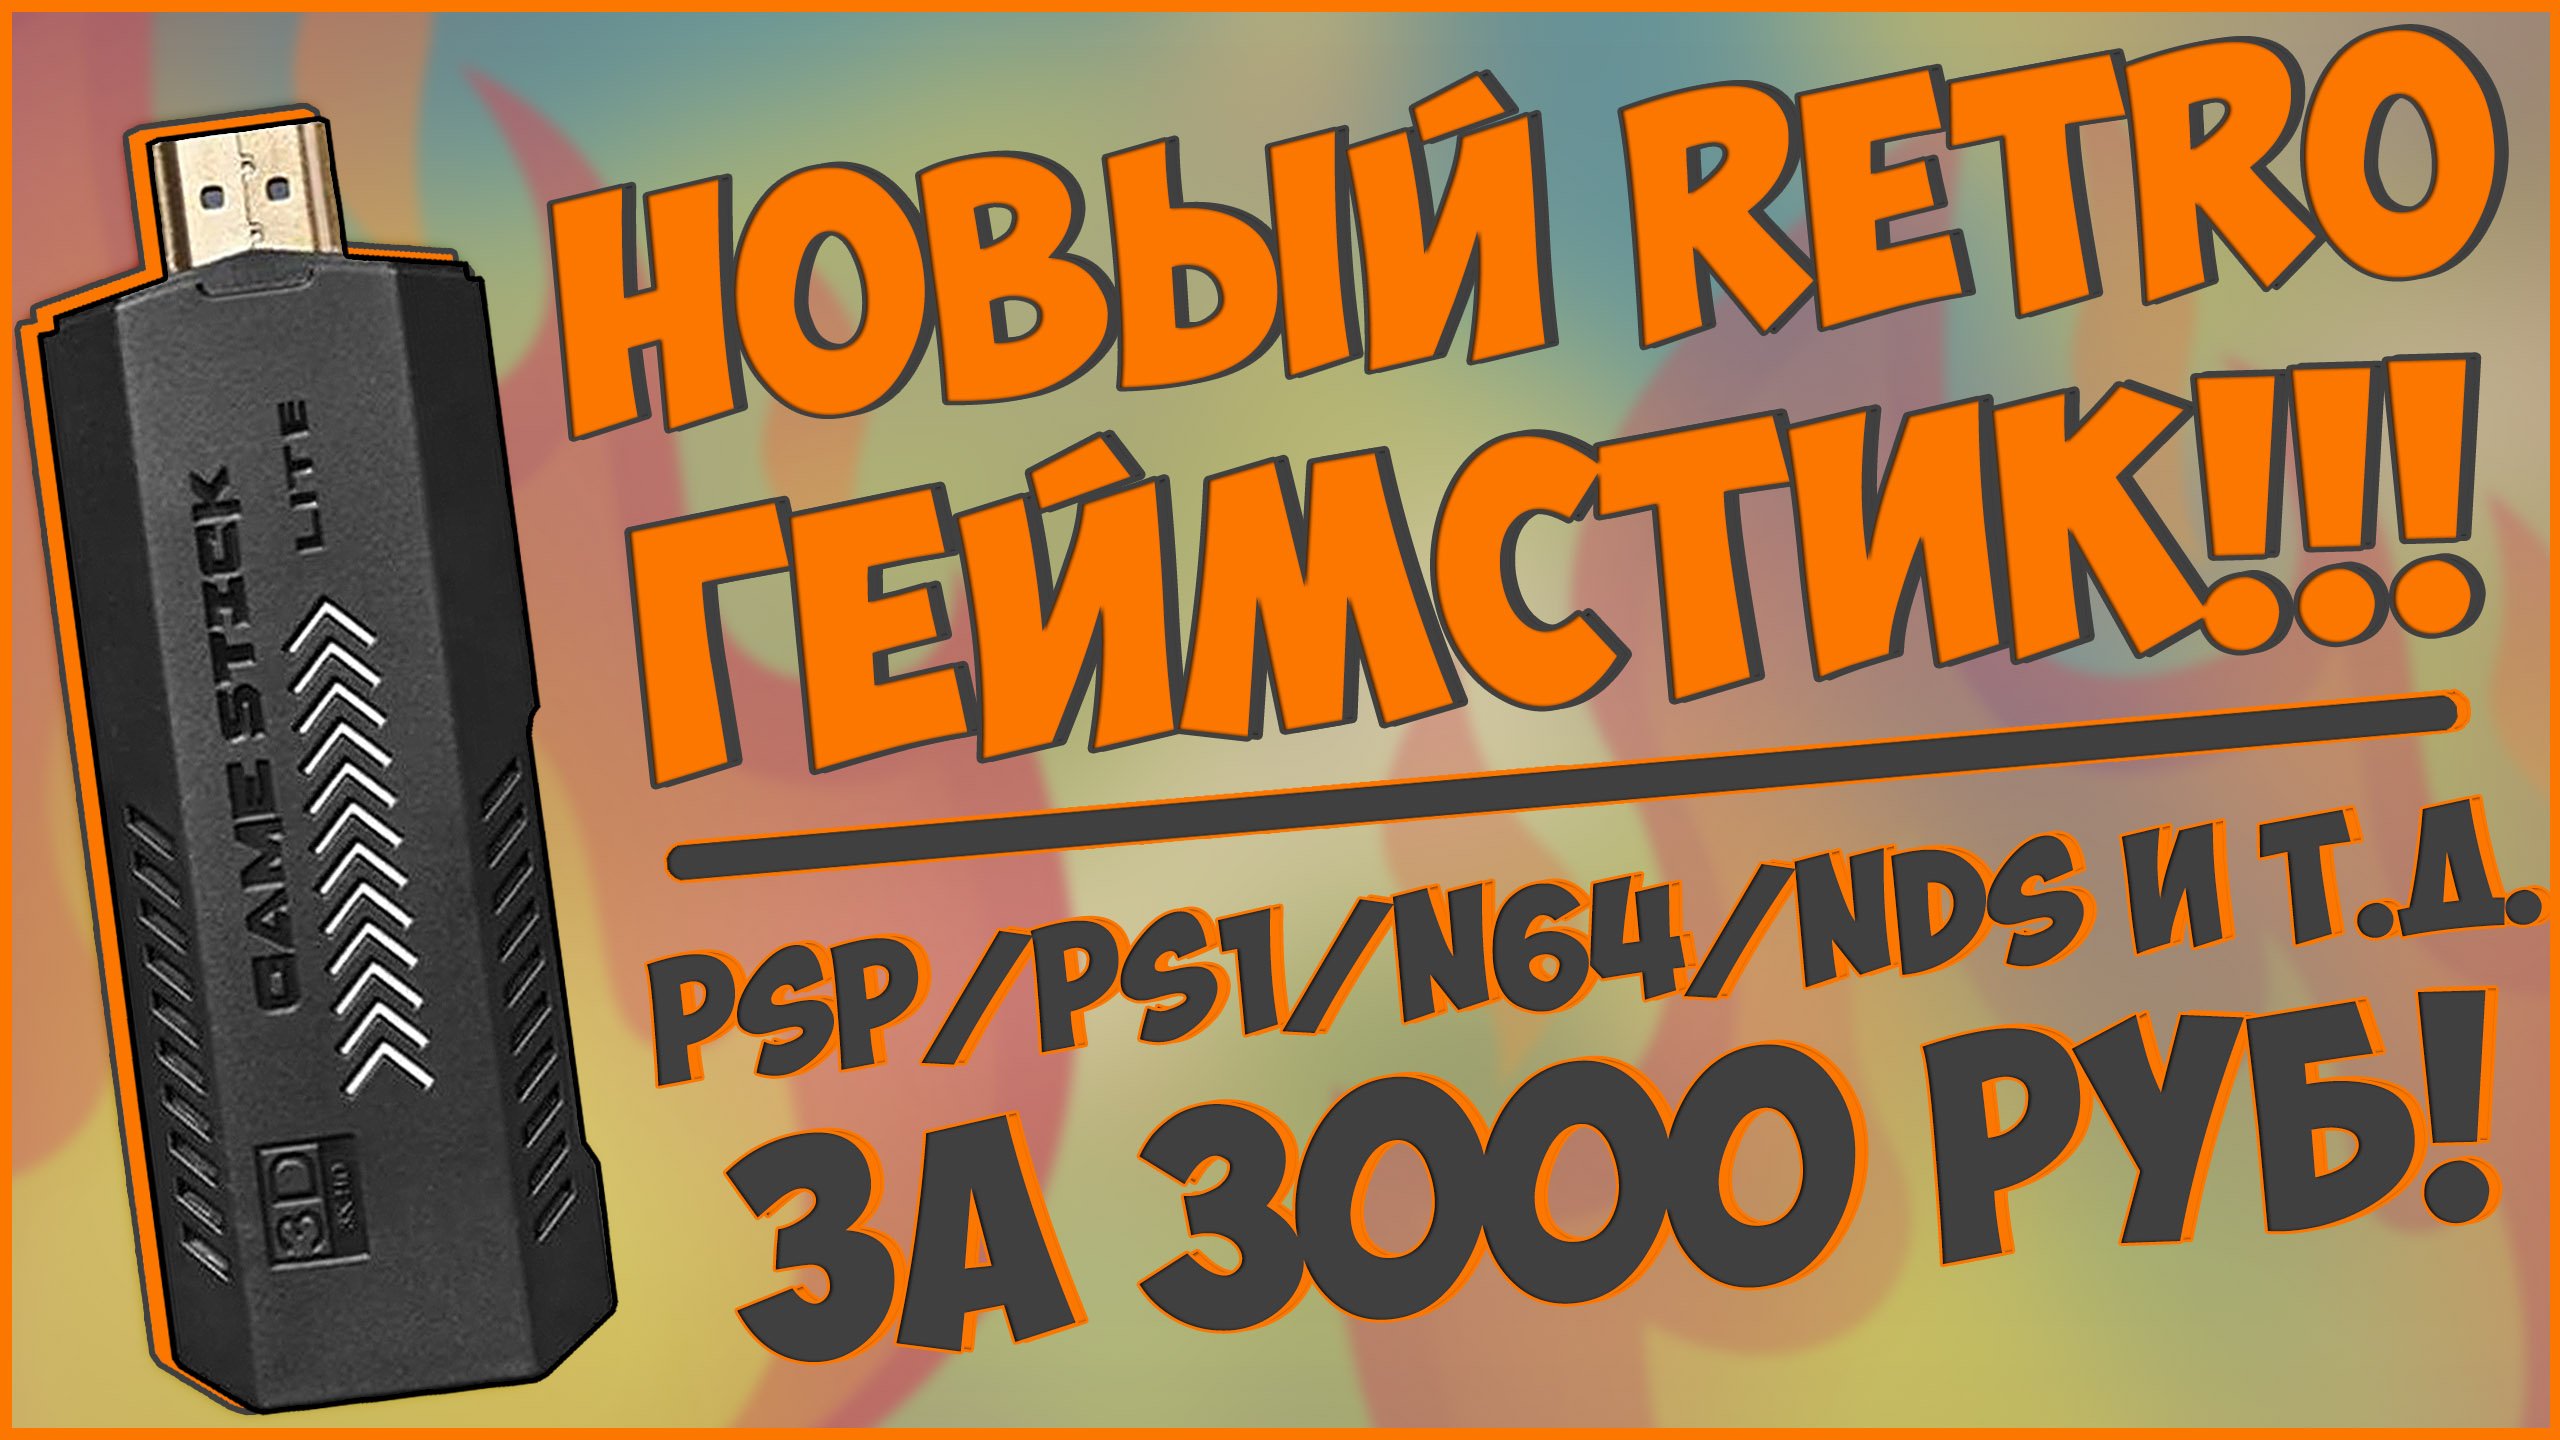 GAME STICK X2+ | НОВЫЙ РЕТРО TV ГЕЙМСТИК | PSP/PS1/N64/NDS И Т.Д. ???